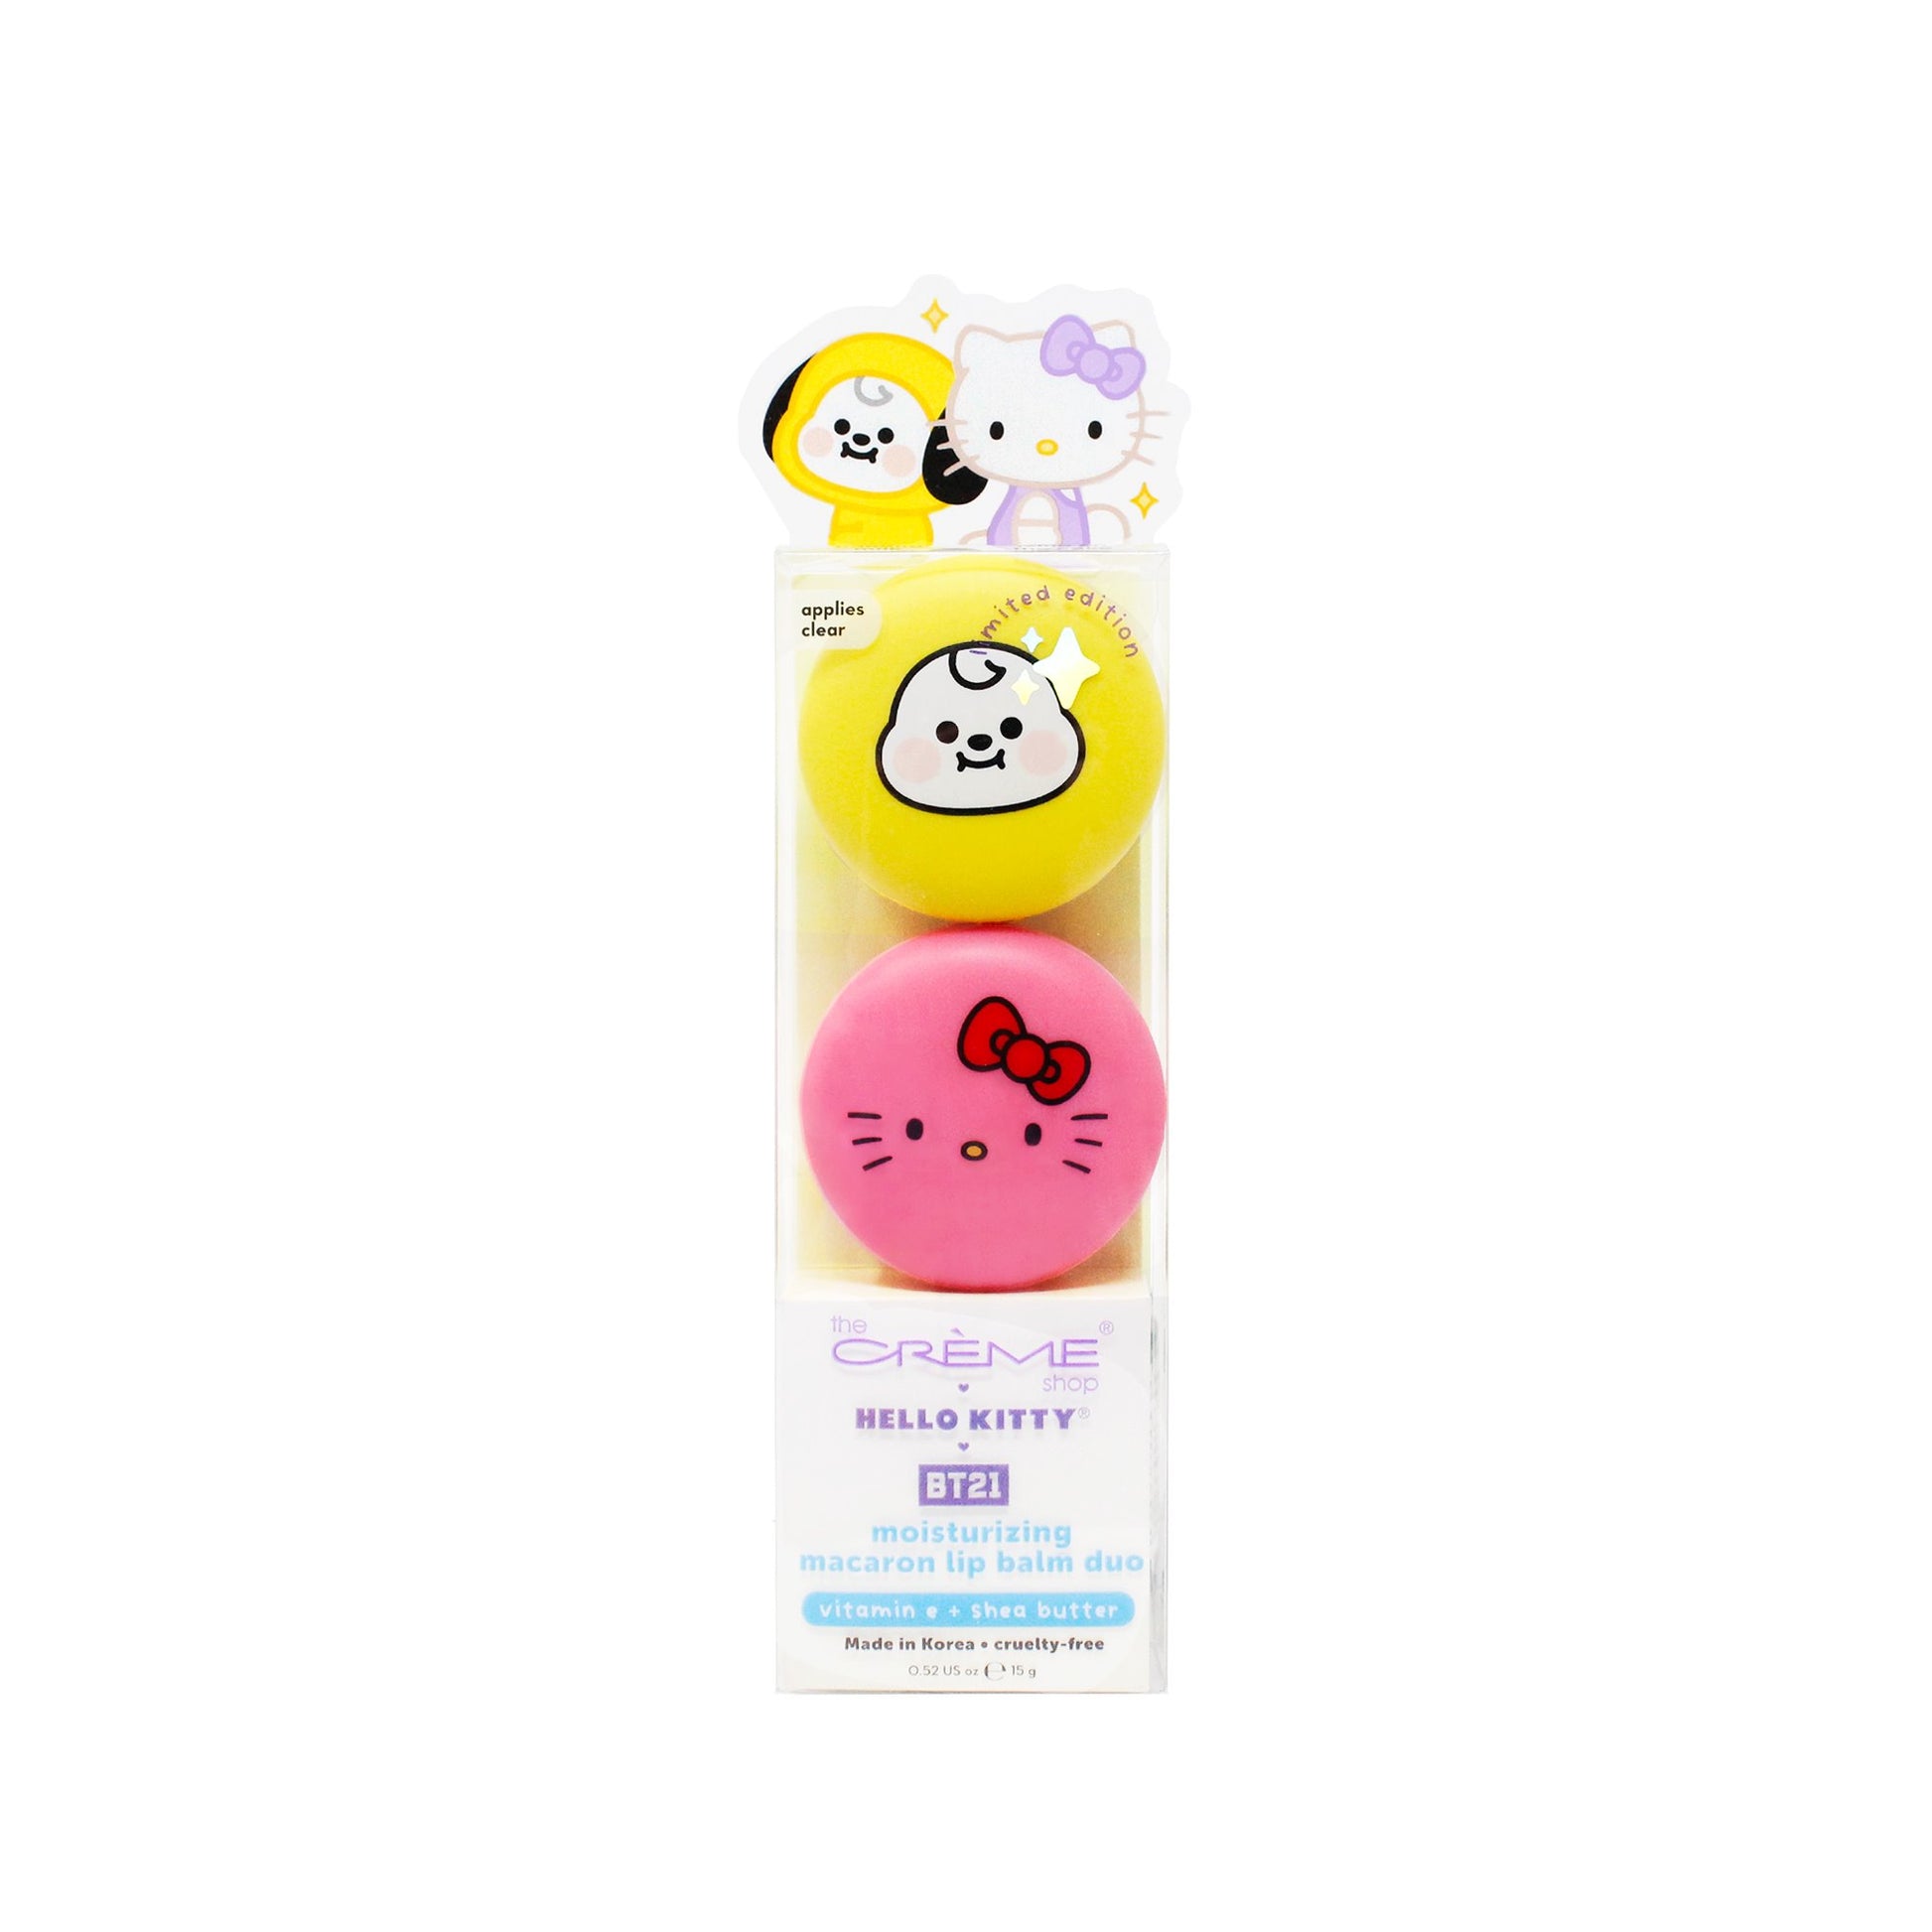 Hello Kitty & BT21 CHIMMY Moisturizing Macaron Lip Balm Duo, $18